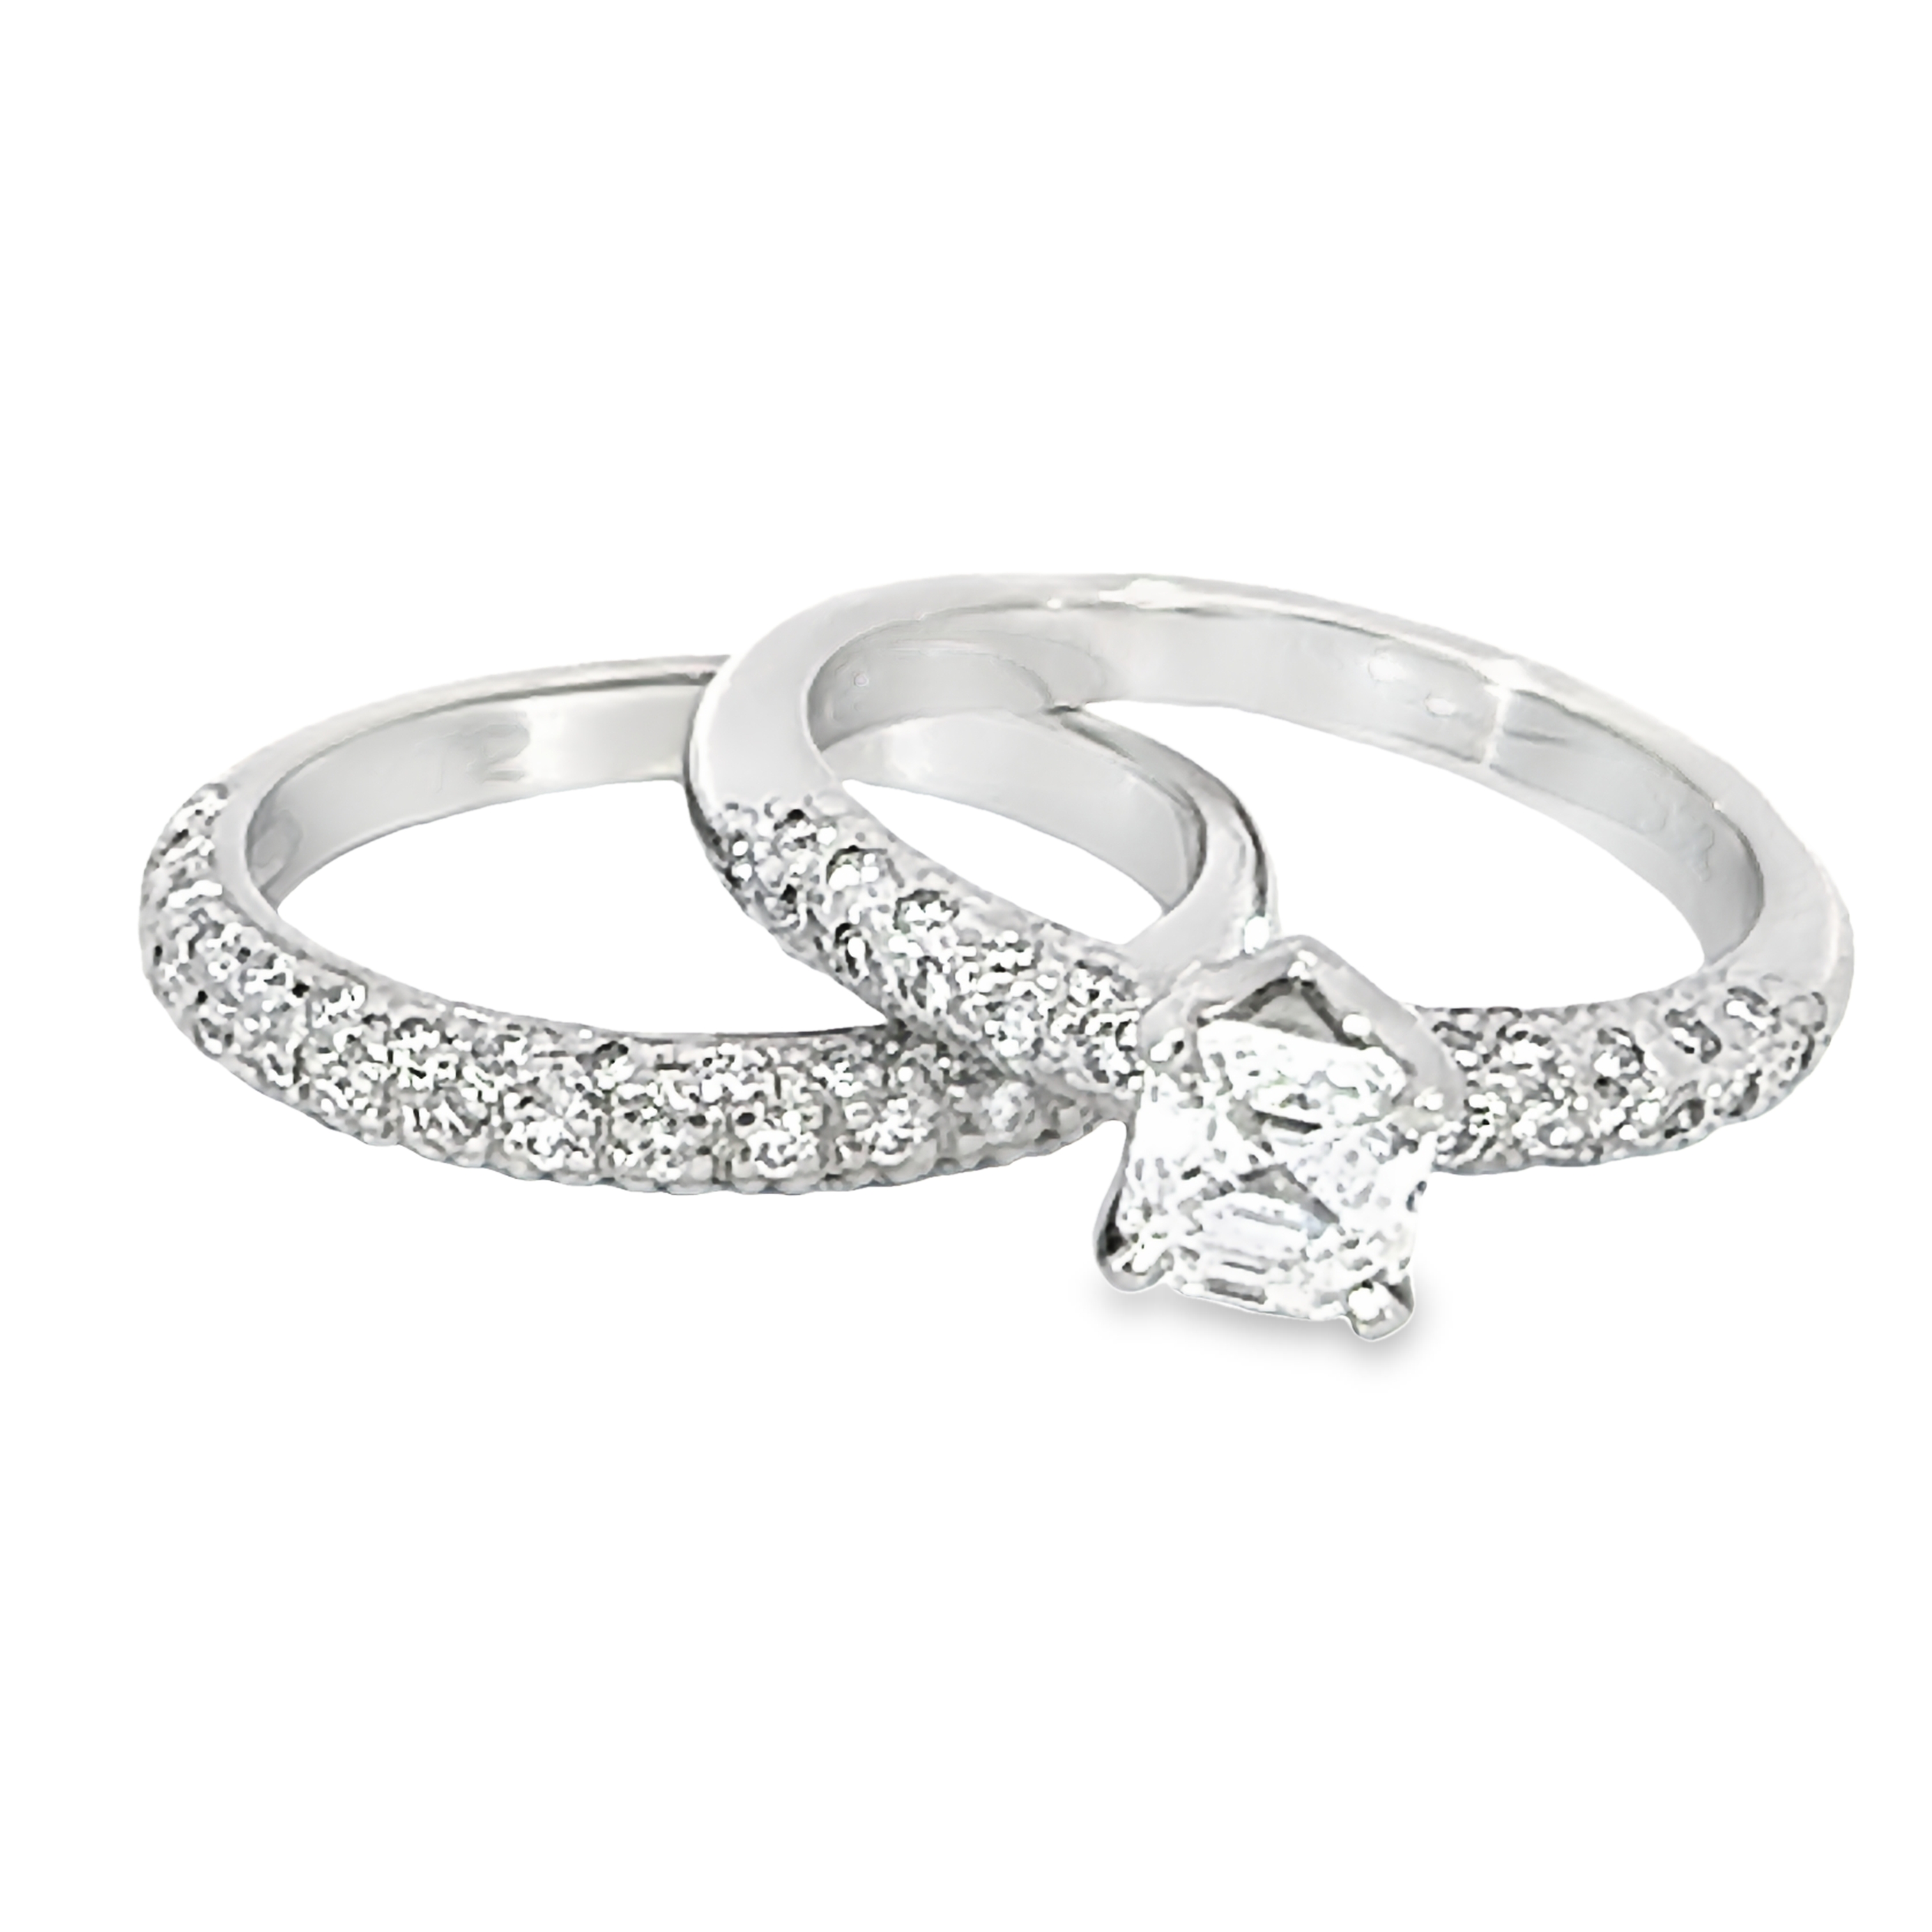 Platinum Wedding Set Size 6.5 With One 0.80Ct Emerald F VS1 Diamond And 77=0.77ctw Round Brilliant G VS Diamonds  dwt: 6